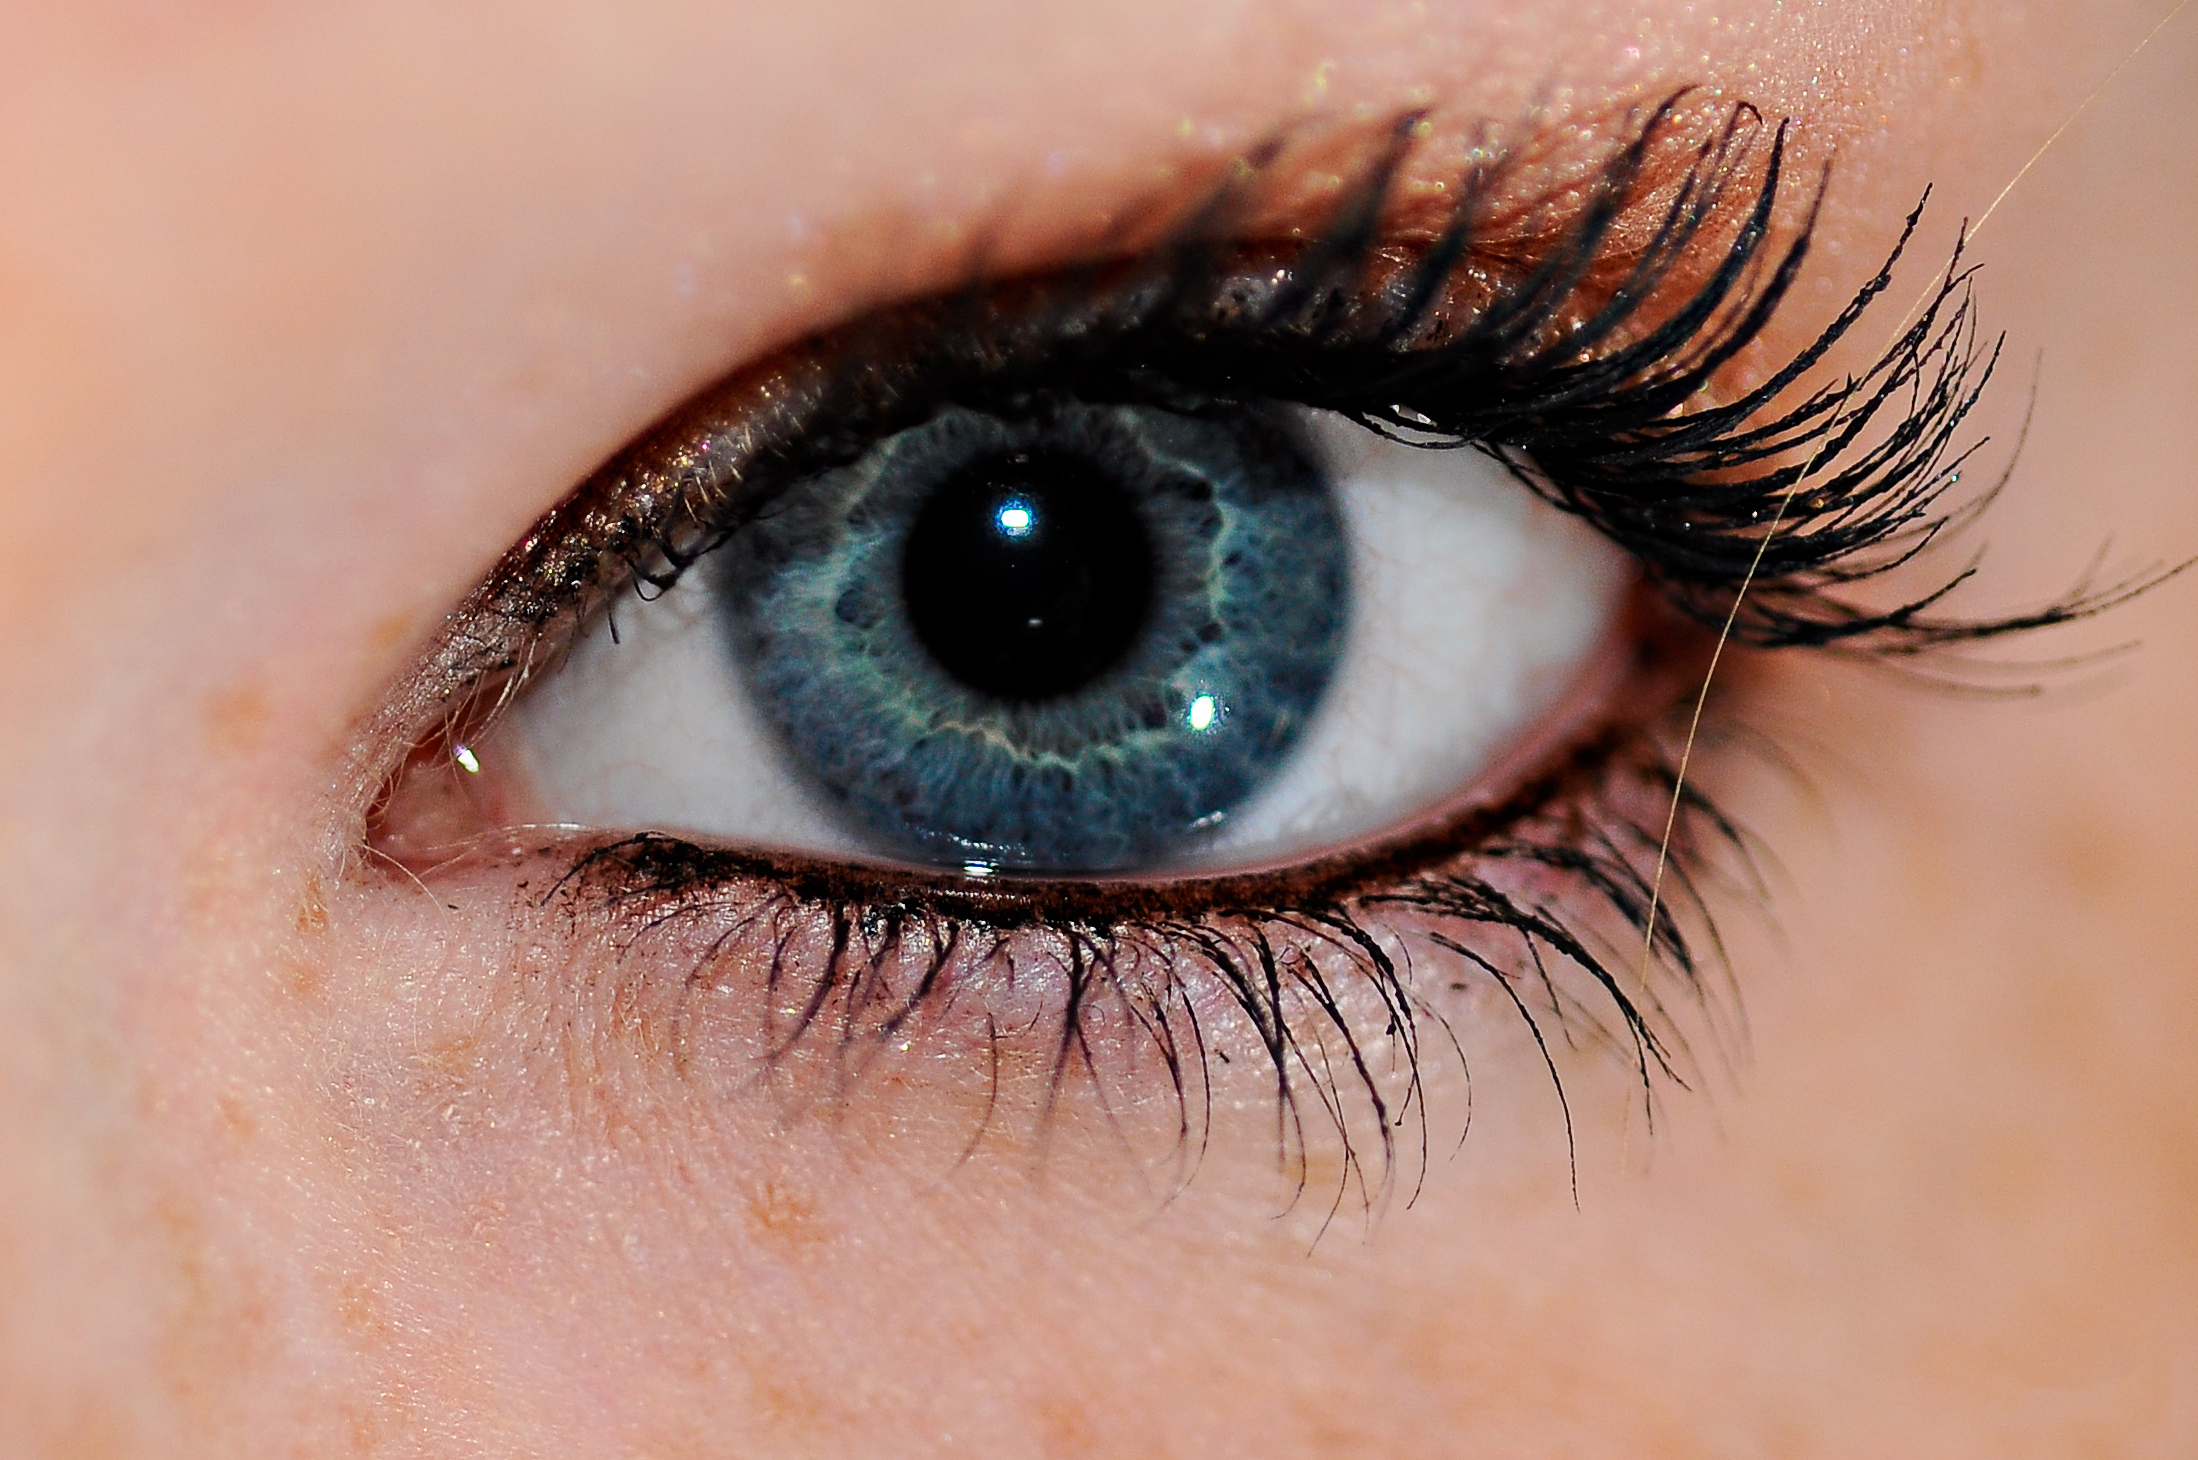 Human eye - blue - without watermark